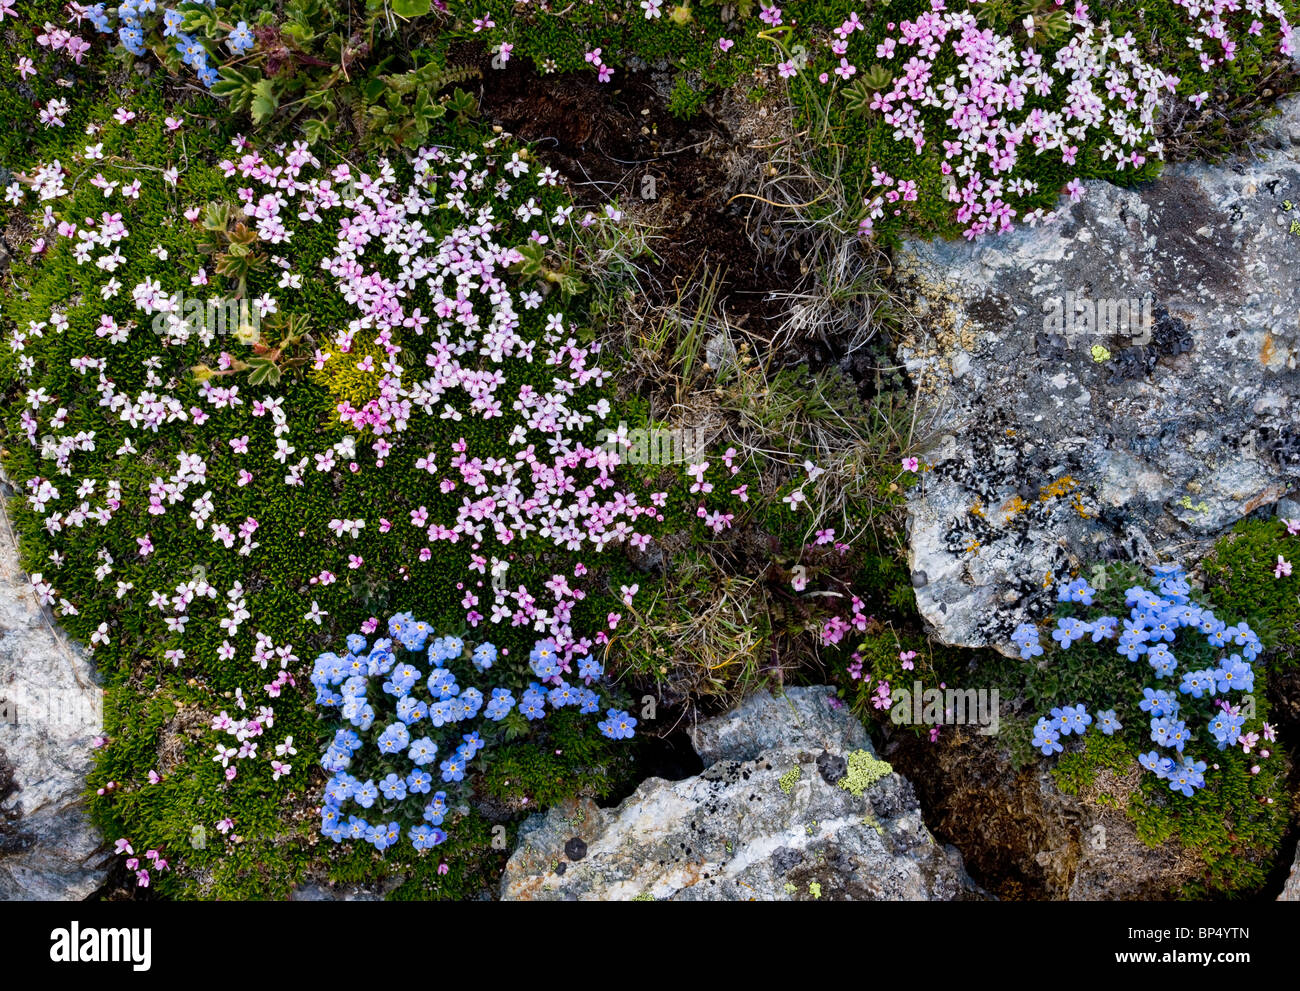 King-of-the-Alps, Eritrichium nanum, and Moss Campion Silene acaulis on the Livigno Pass, Switzerland. Stock Photo